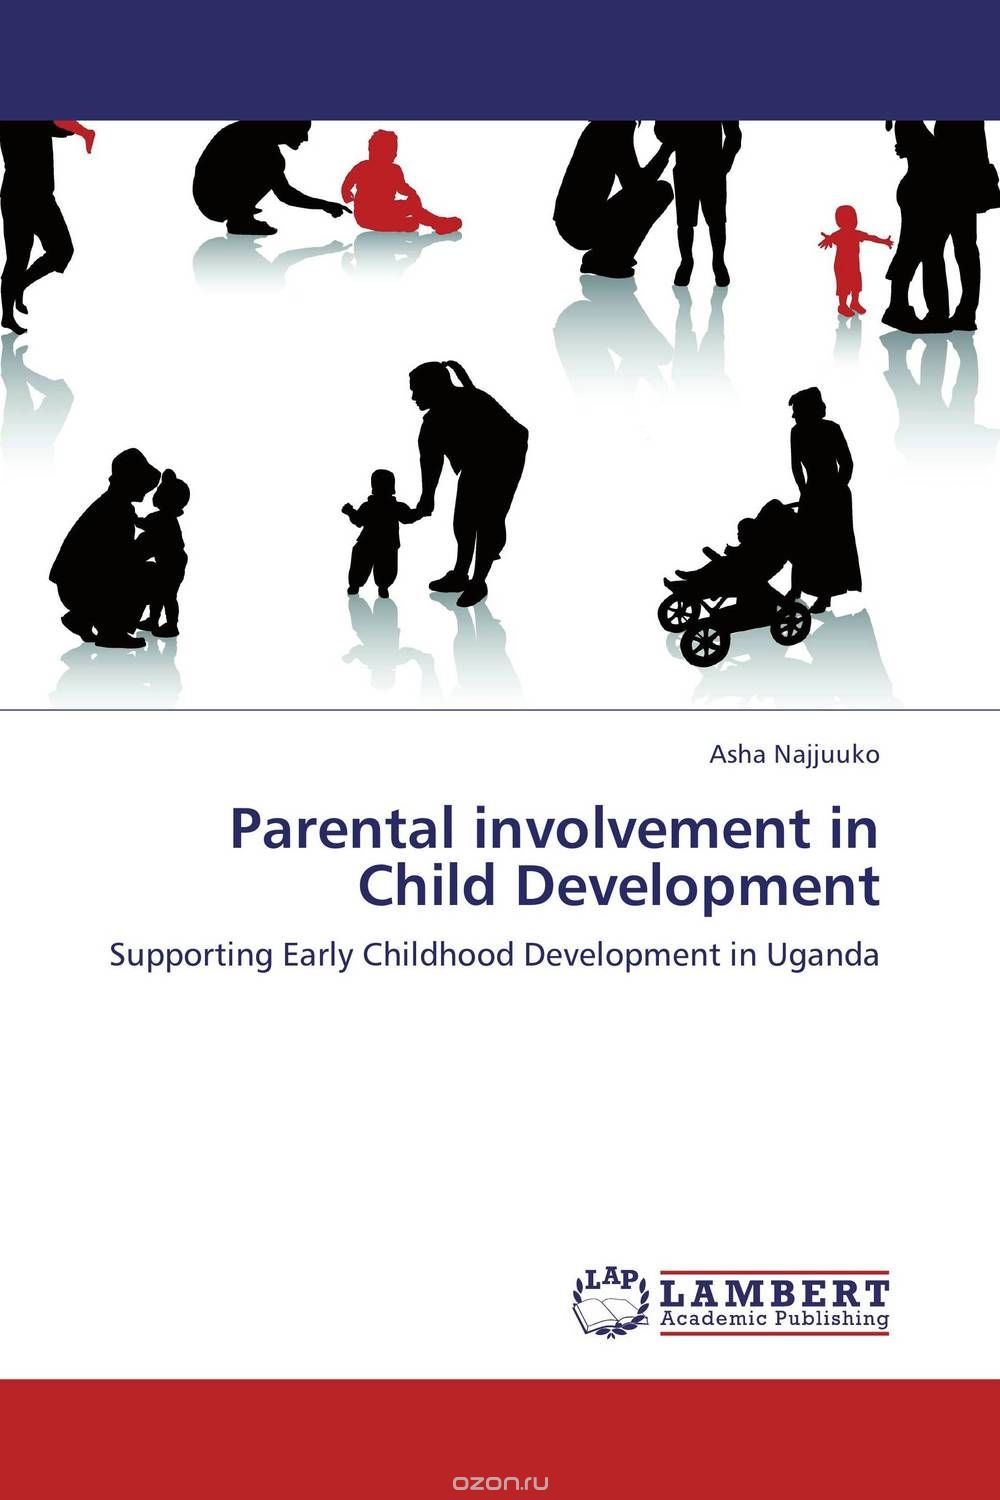 Скачать книгу "Parental involvement in Child Development"